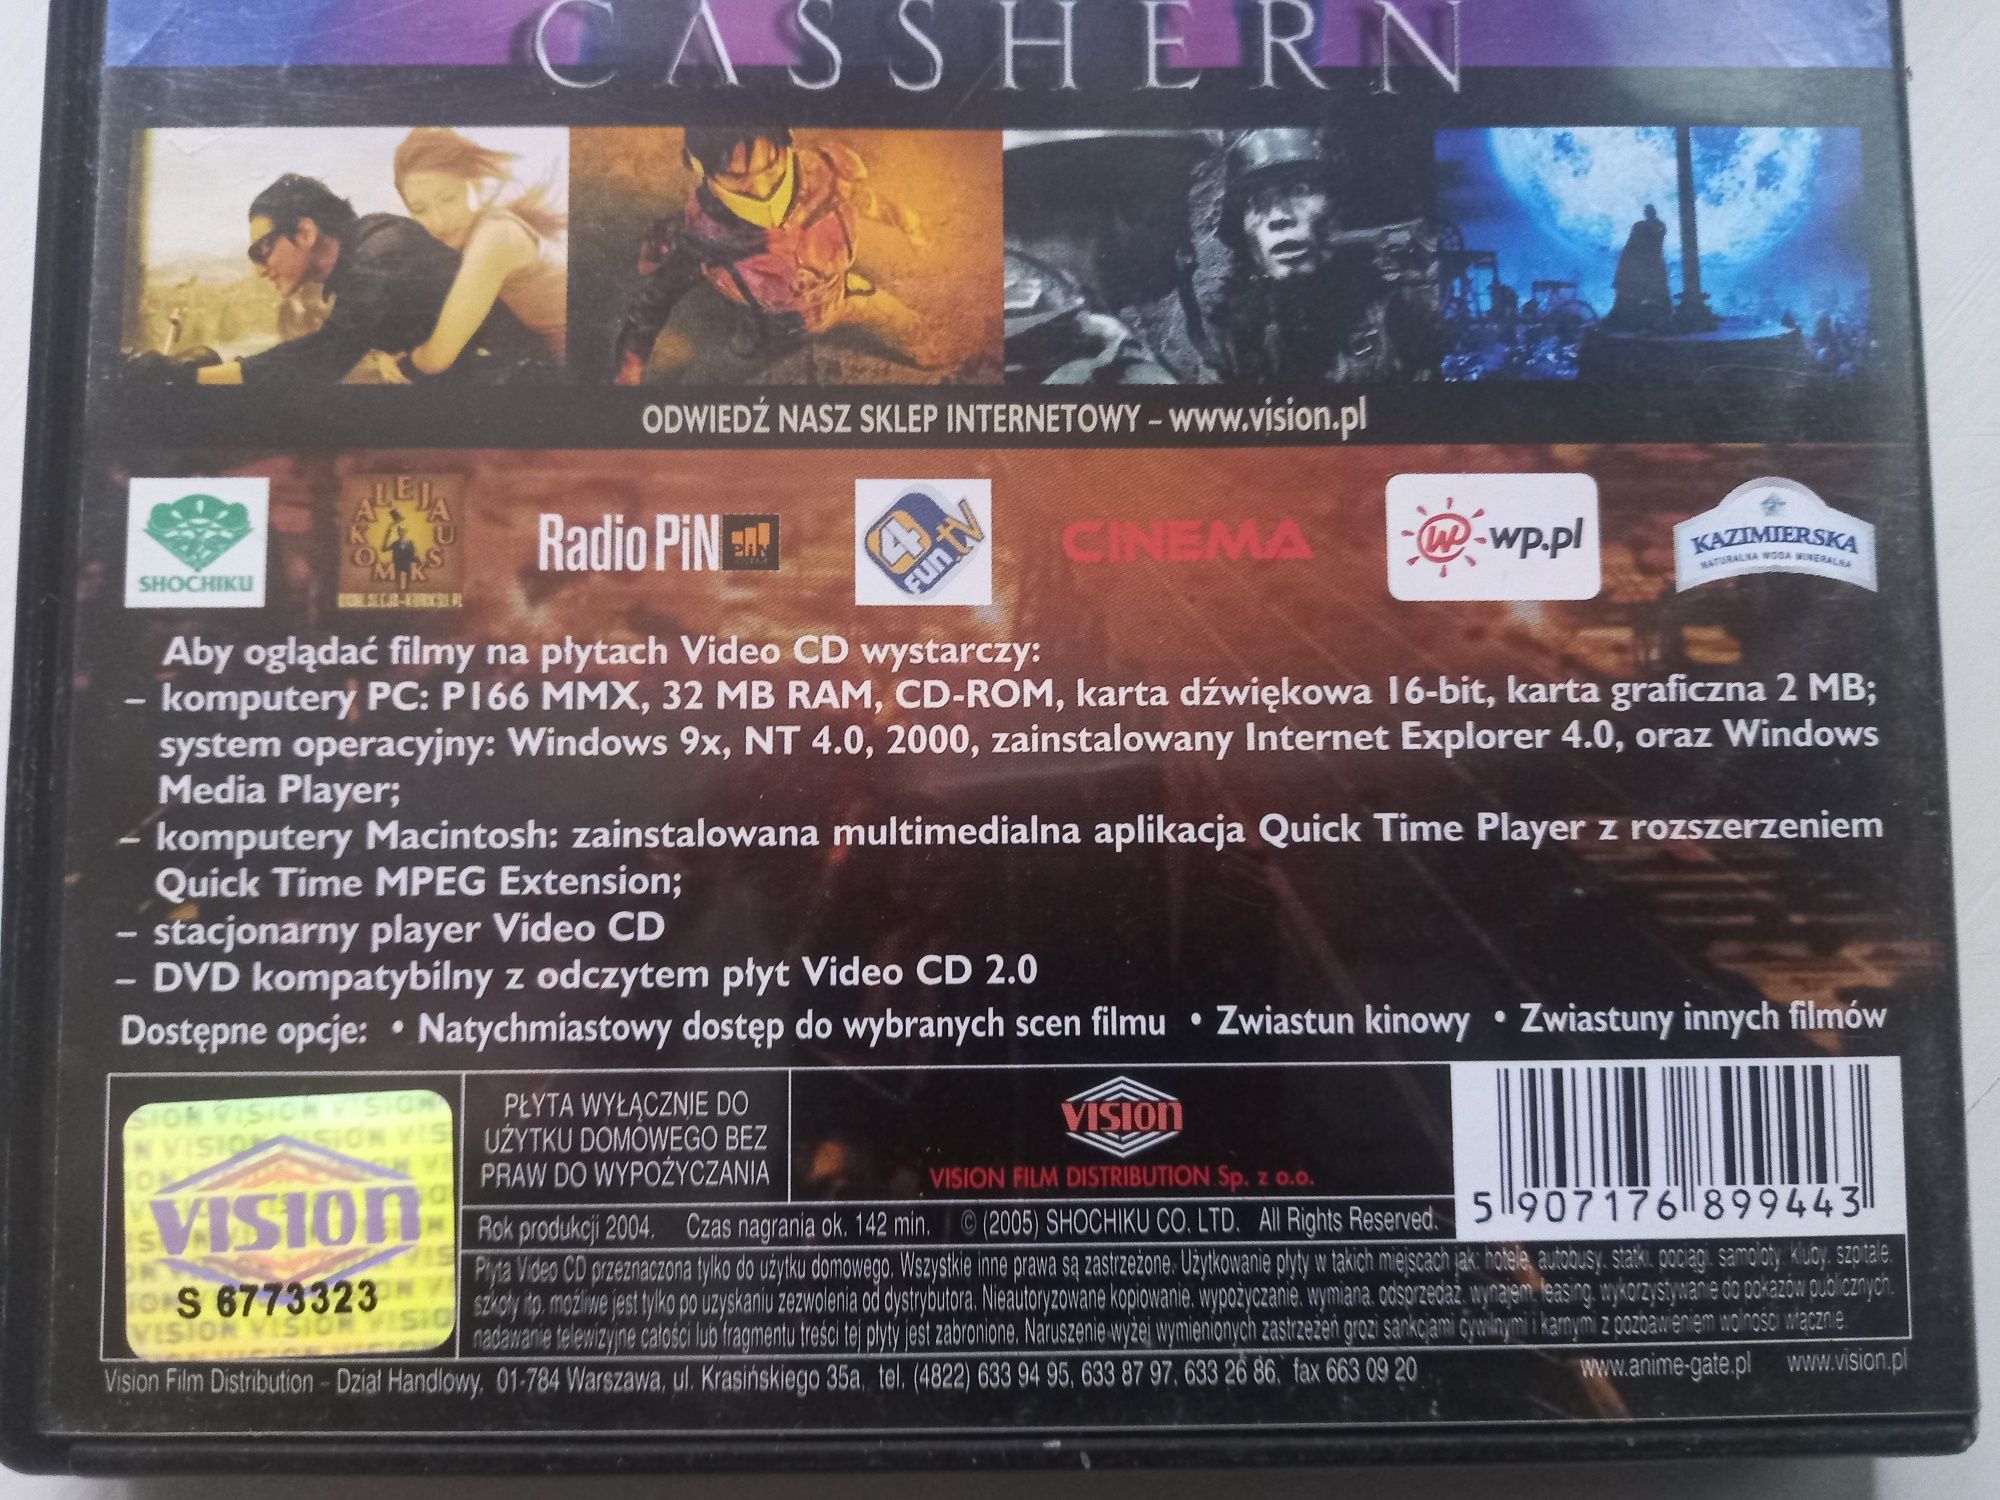 Film Casshern Video CD